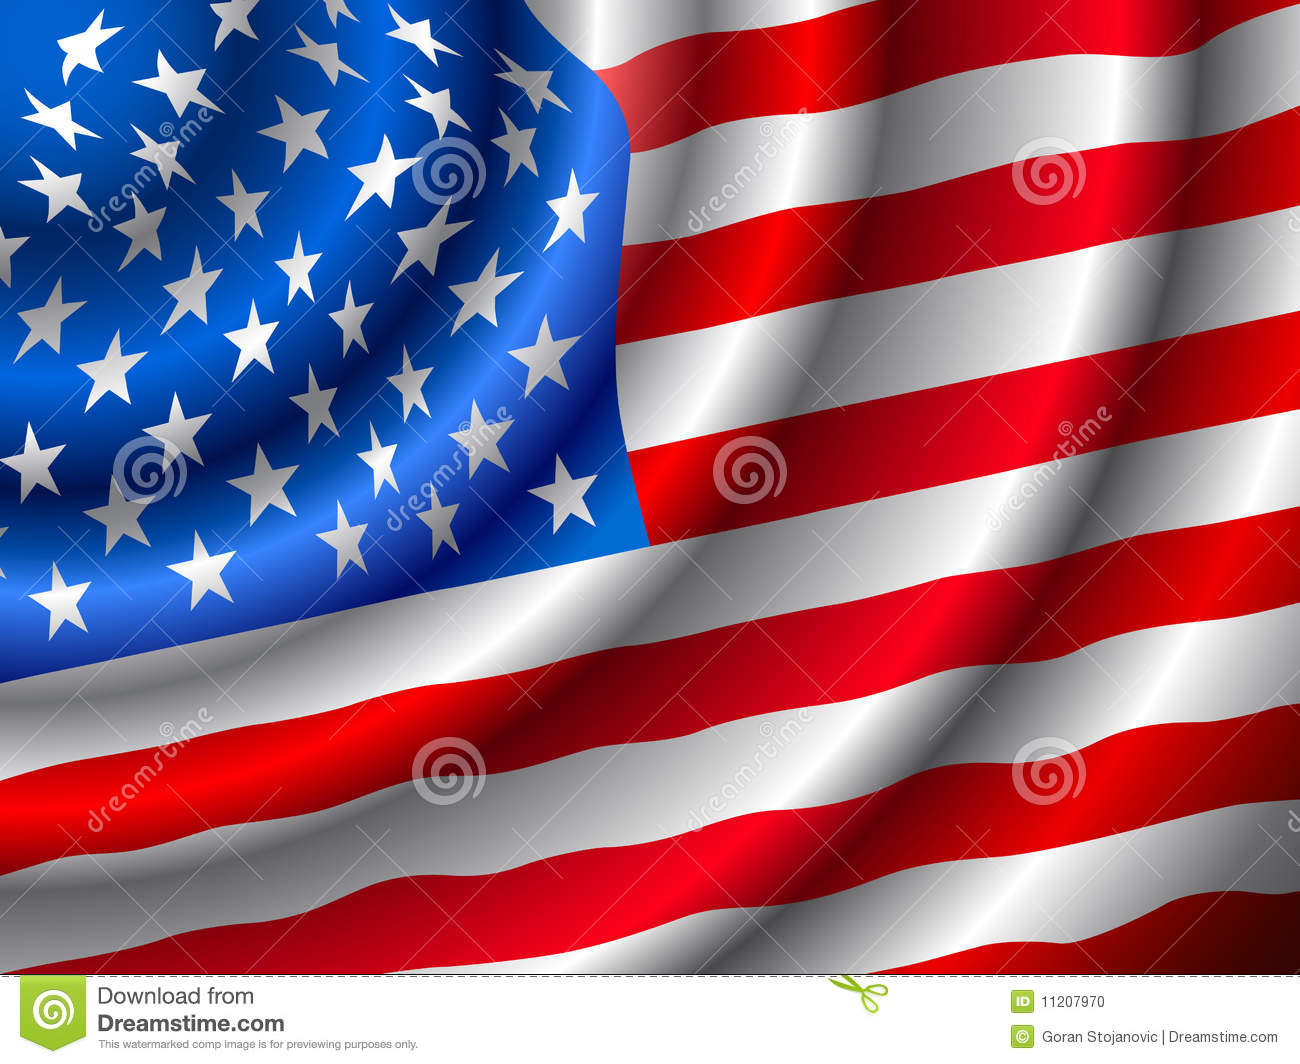 Waving American Flag Vector